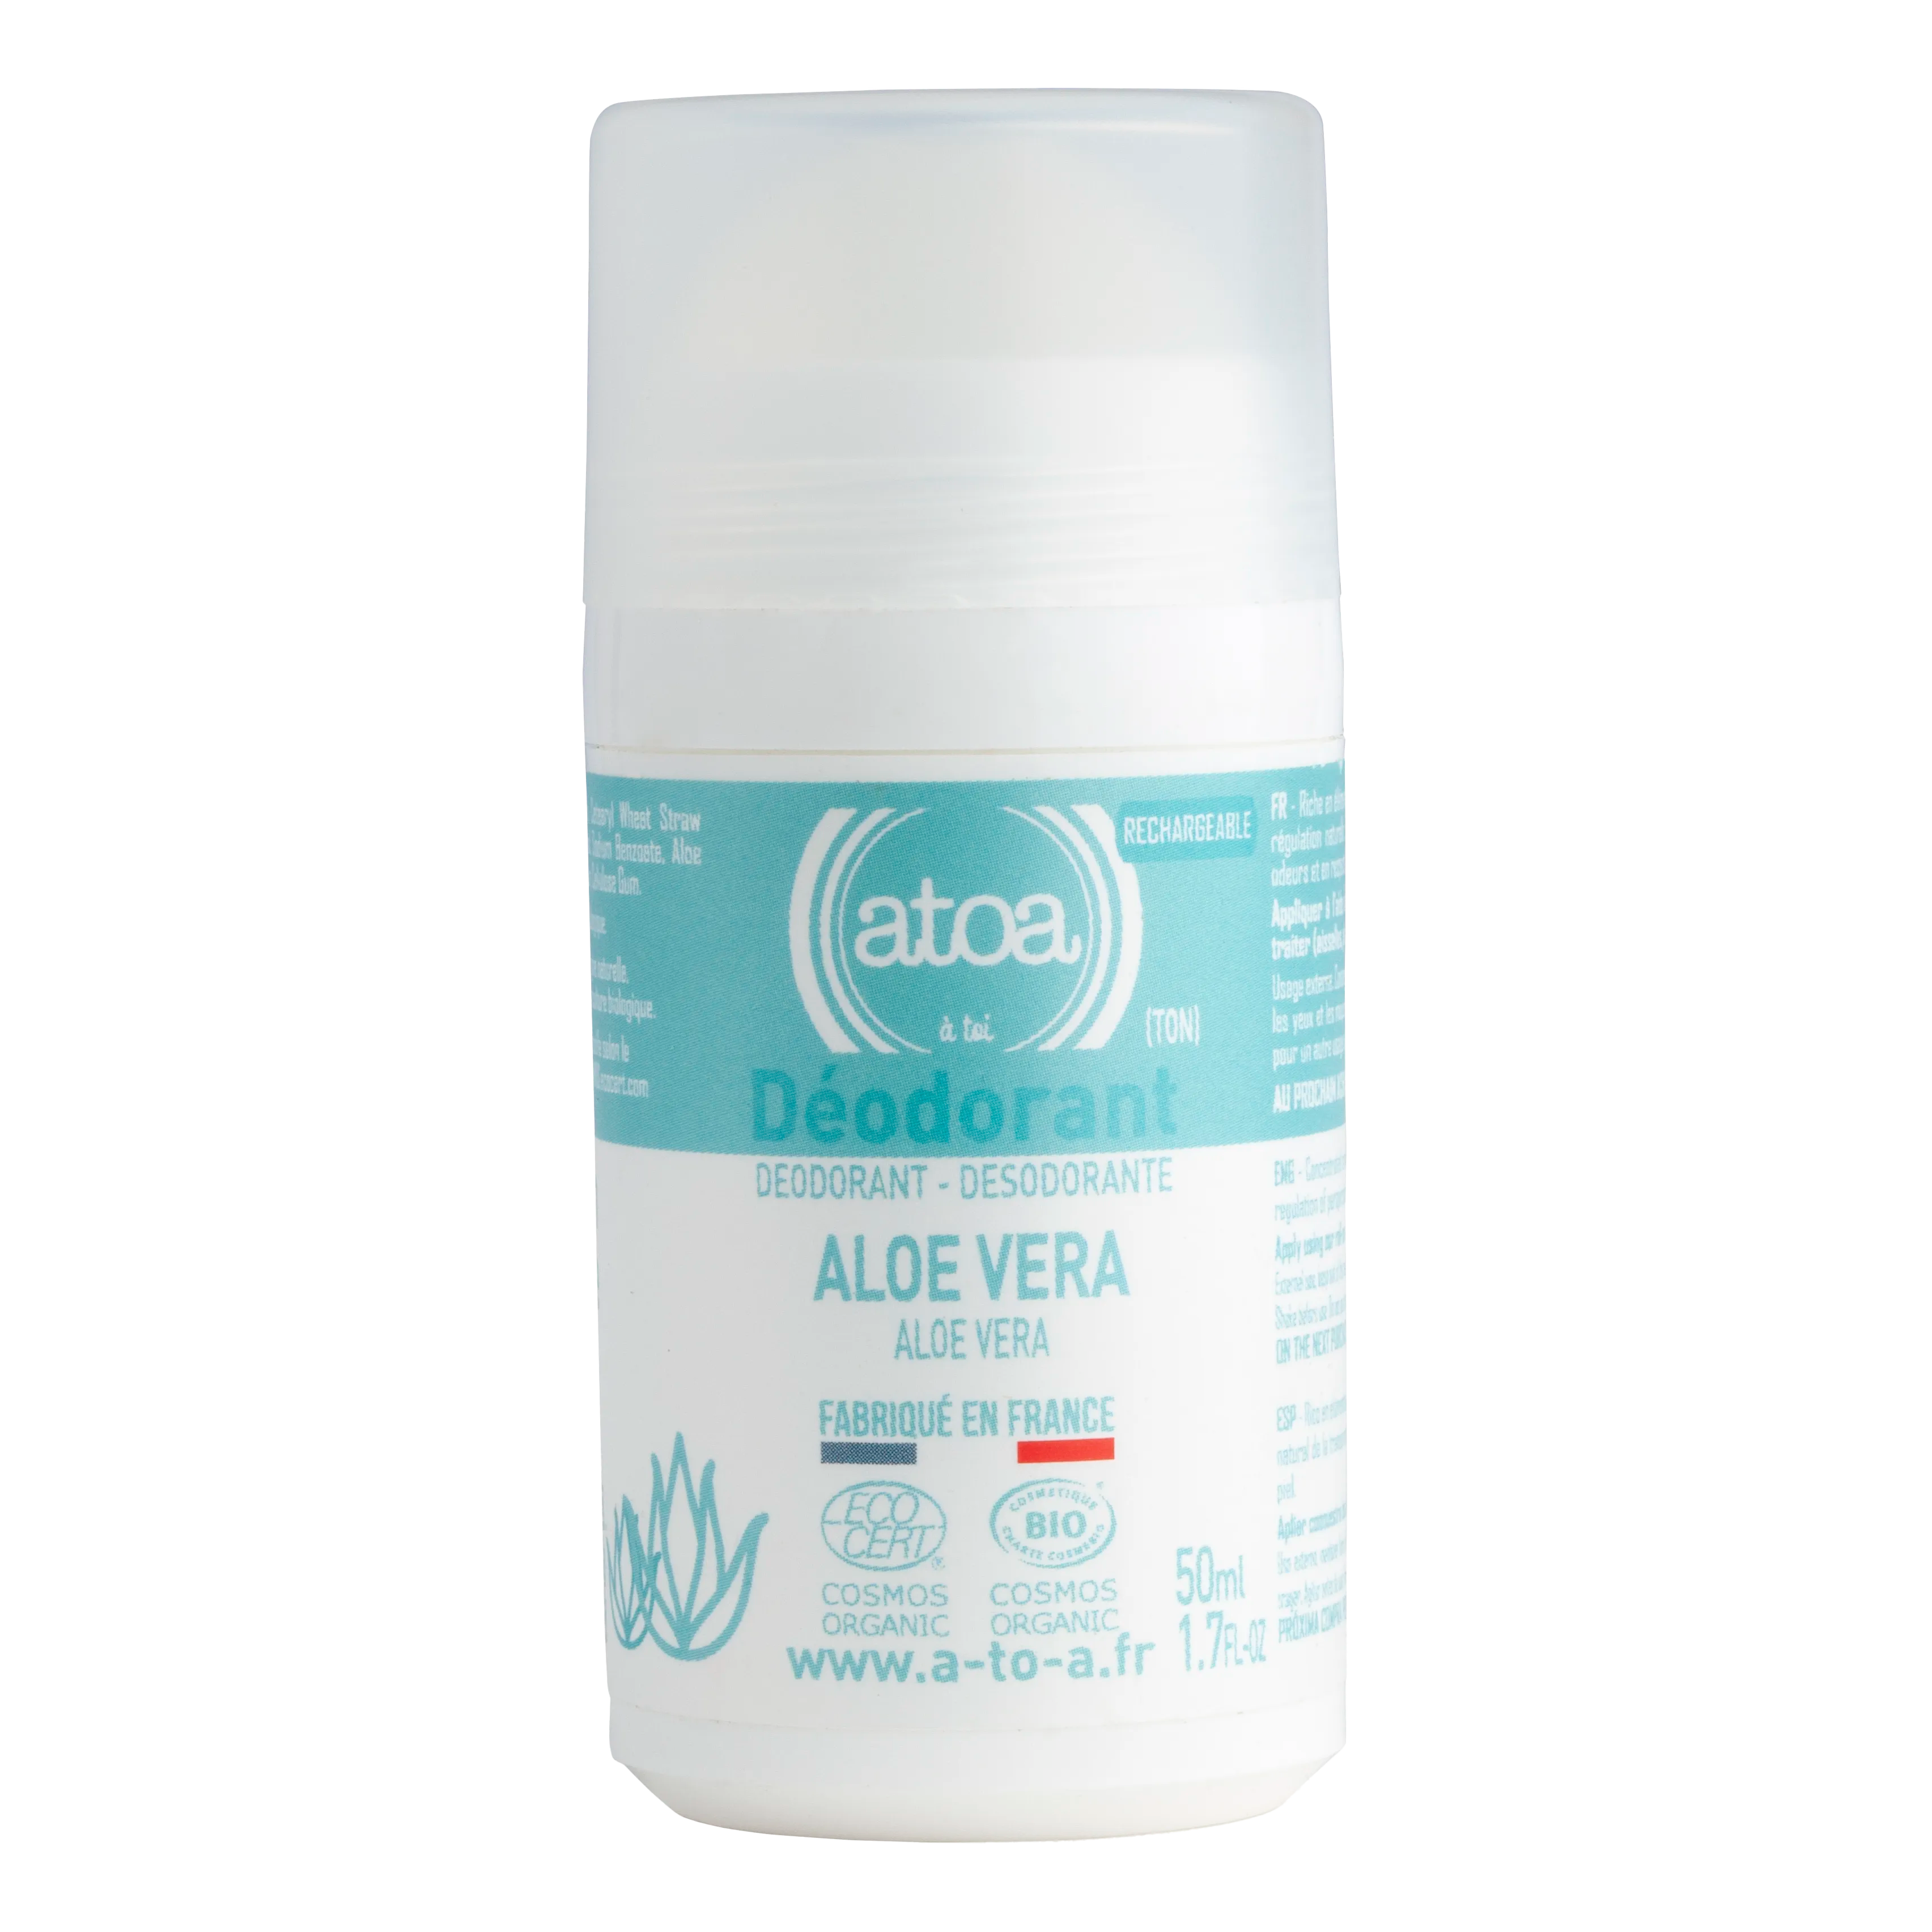 Atoa Roll-on Deodorant Aloe Vera 